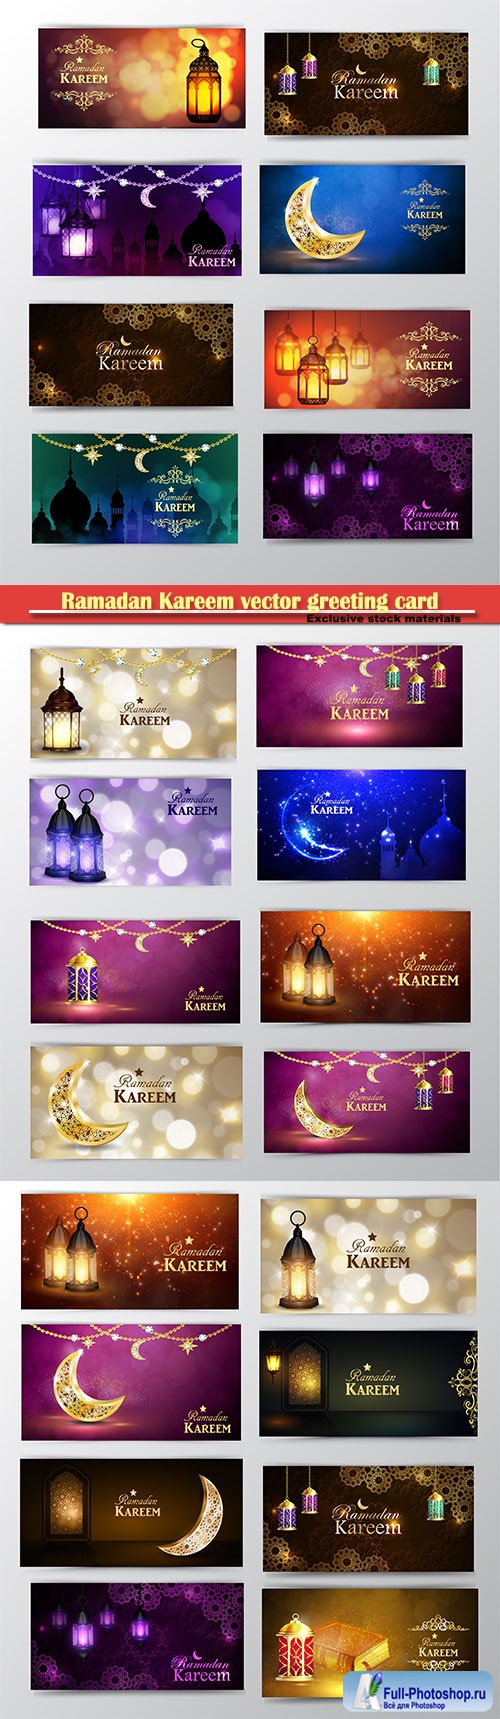 Ramadan Kareem vector greeting background, banner set